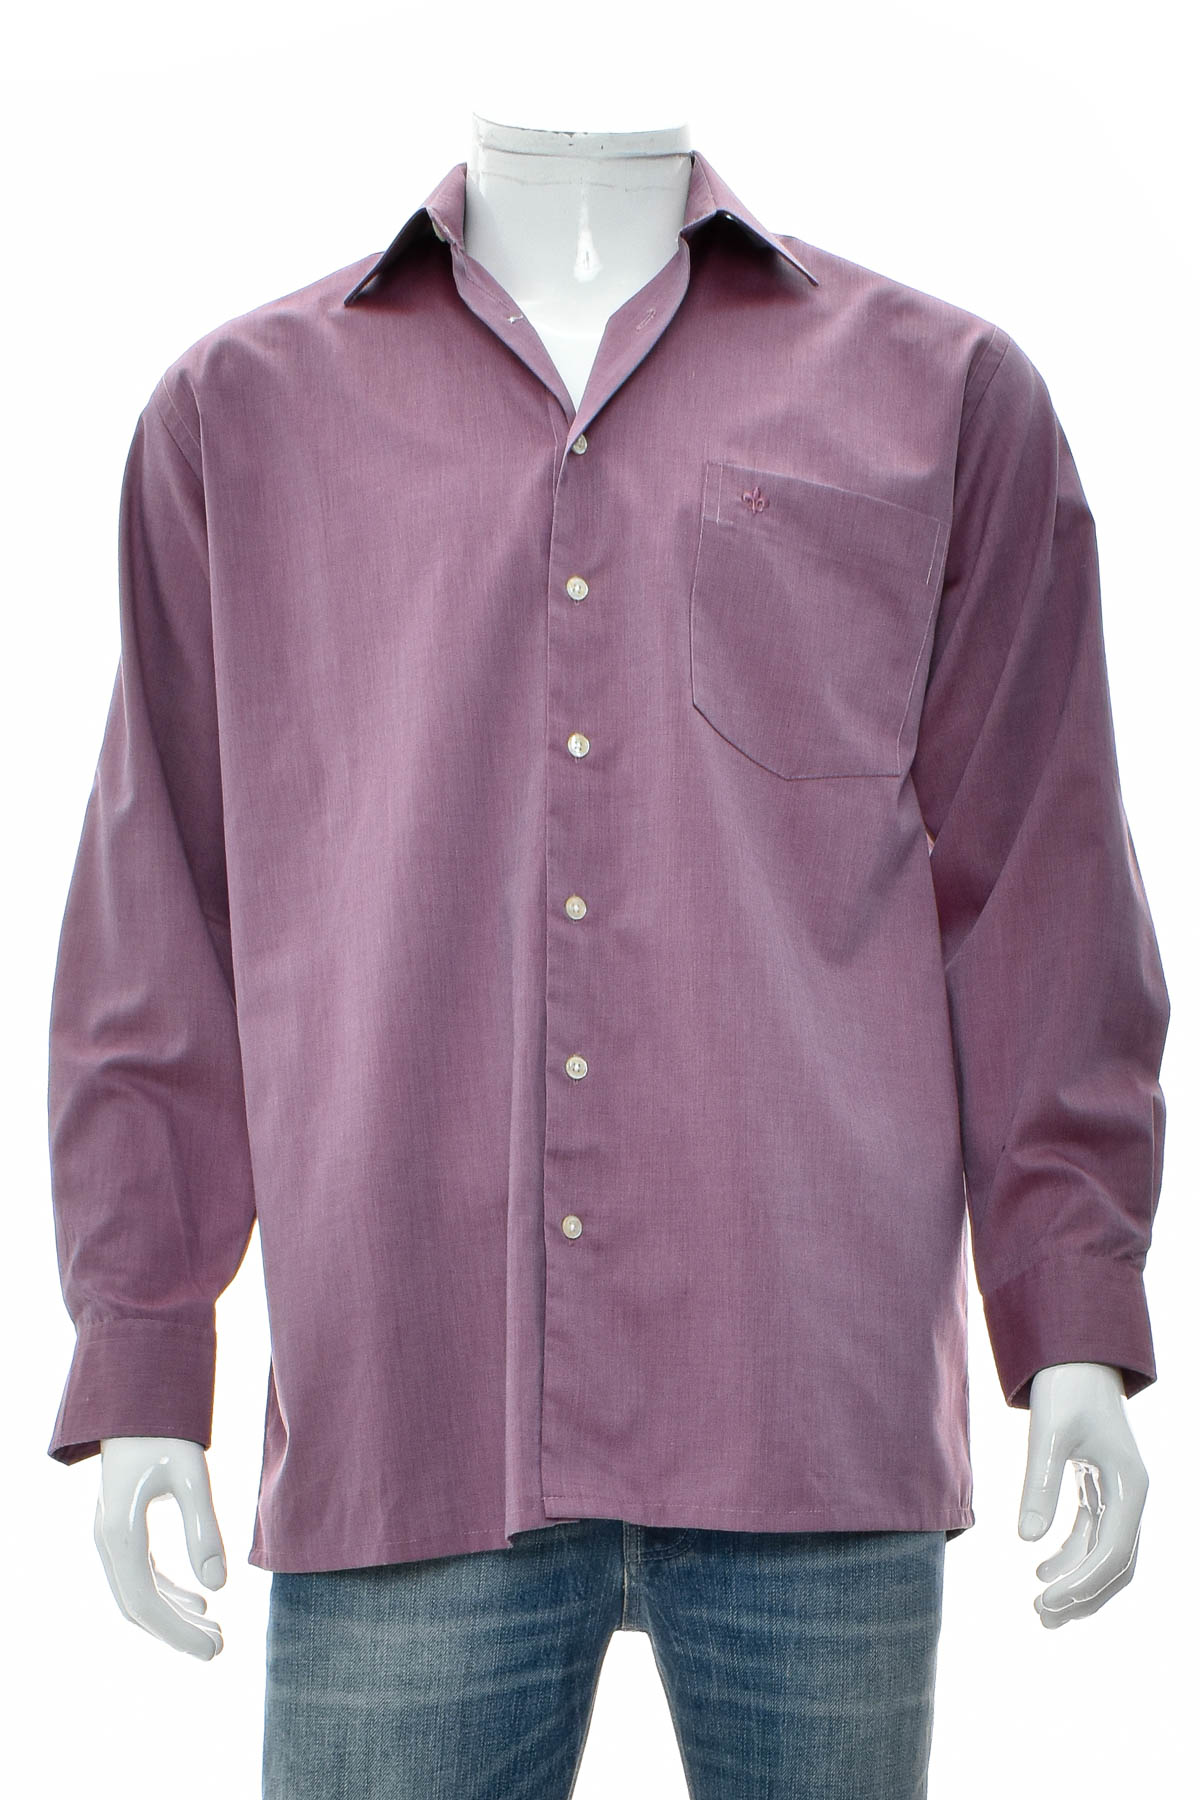 Men's shirt - Caprino - 0